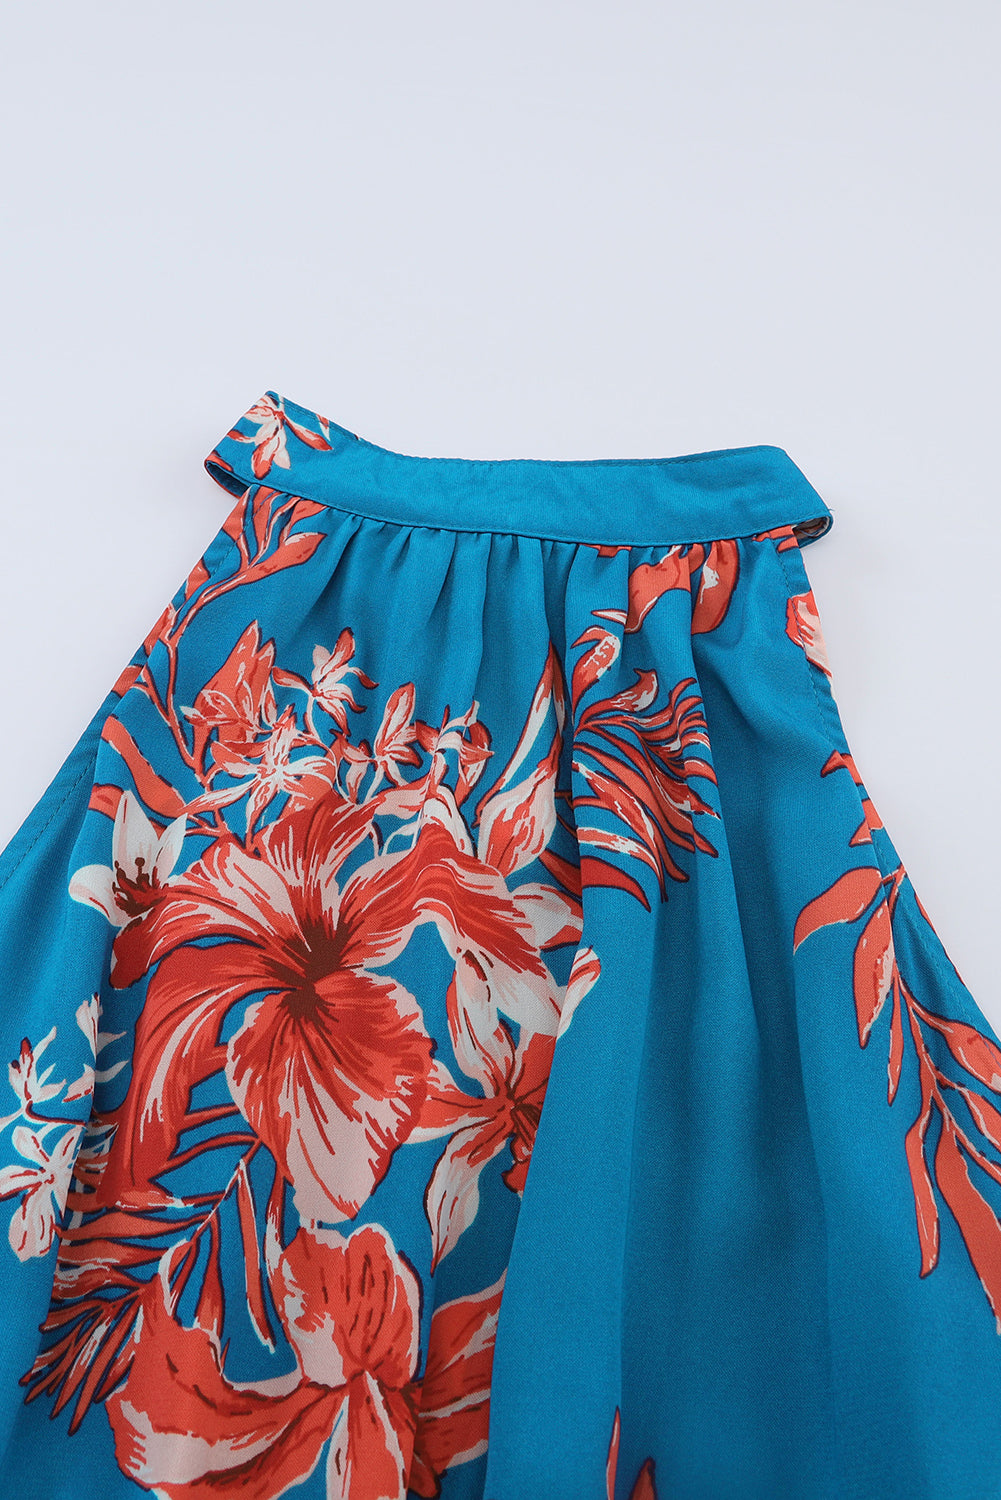 Charming Sky Blue Floral Print Sleeveless Ruffled Mini Dress